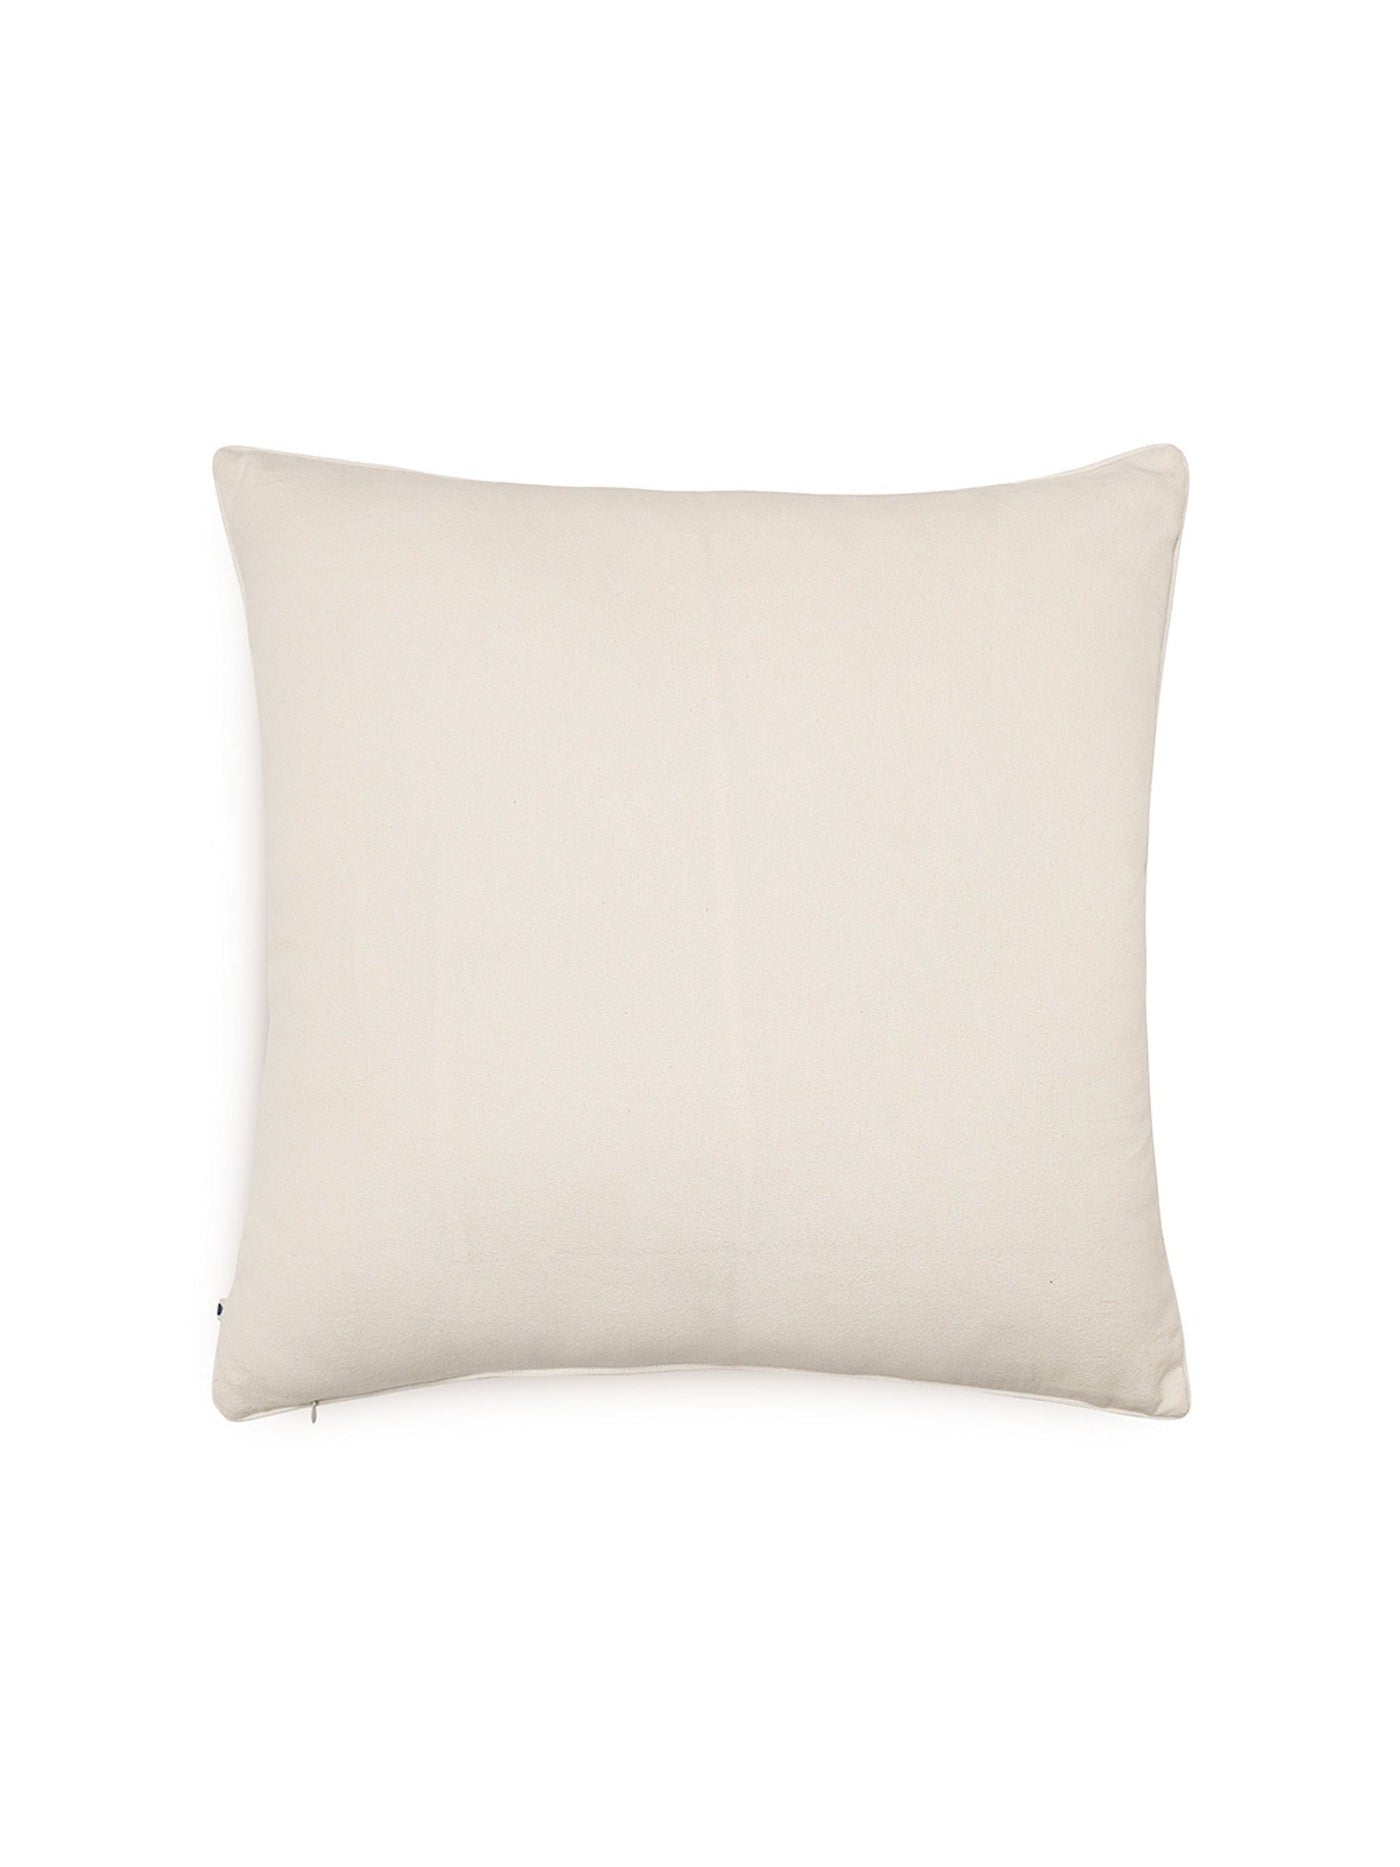 Cushion Cover - Floret Neutral